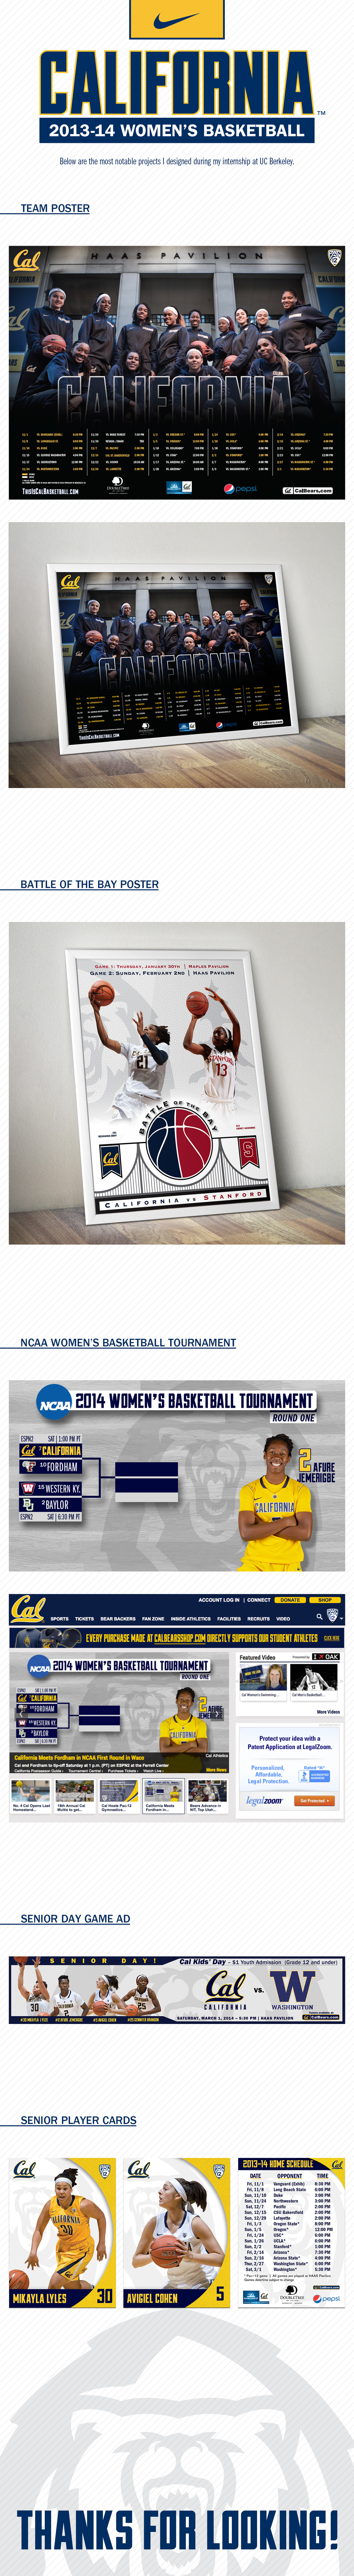 Cal Berkeley stanford NBA mlb WNBA nfl sports college playstation xbox